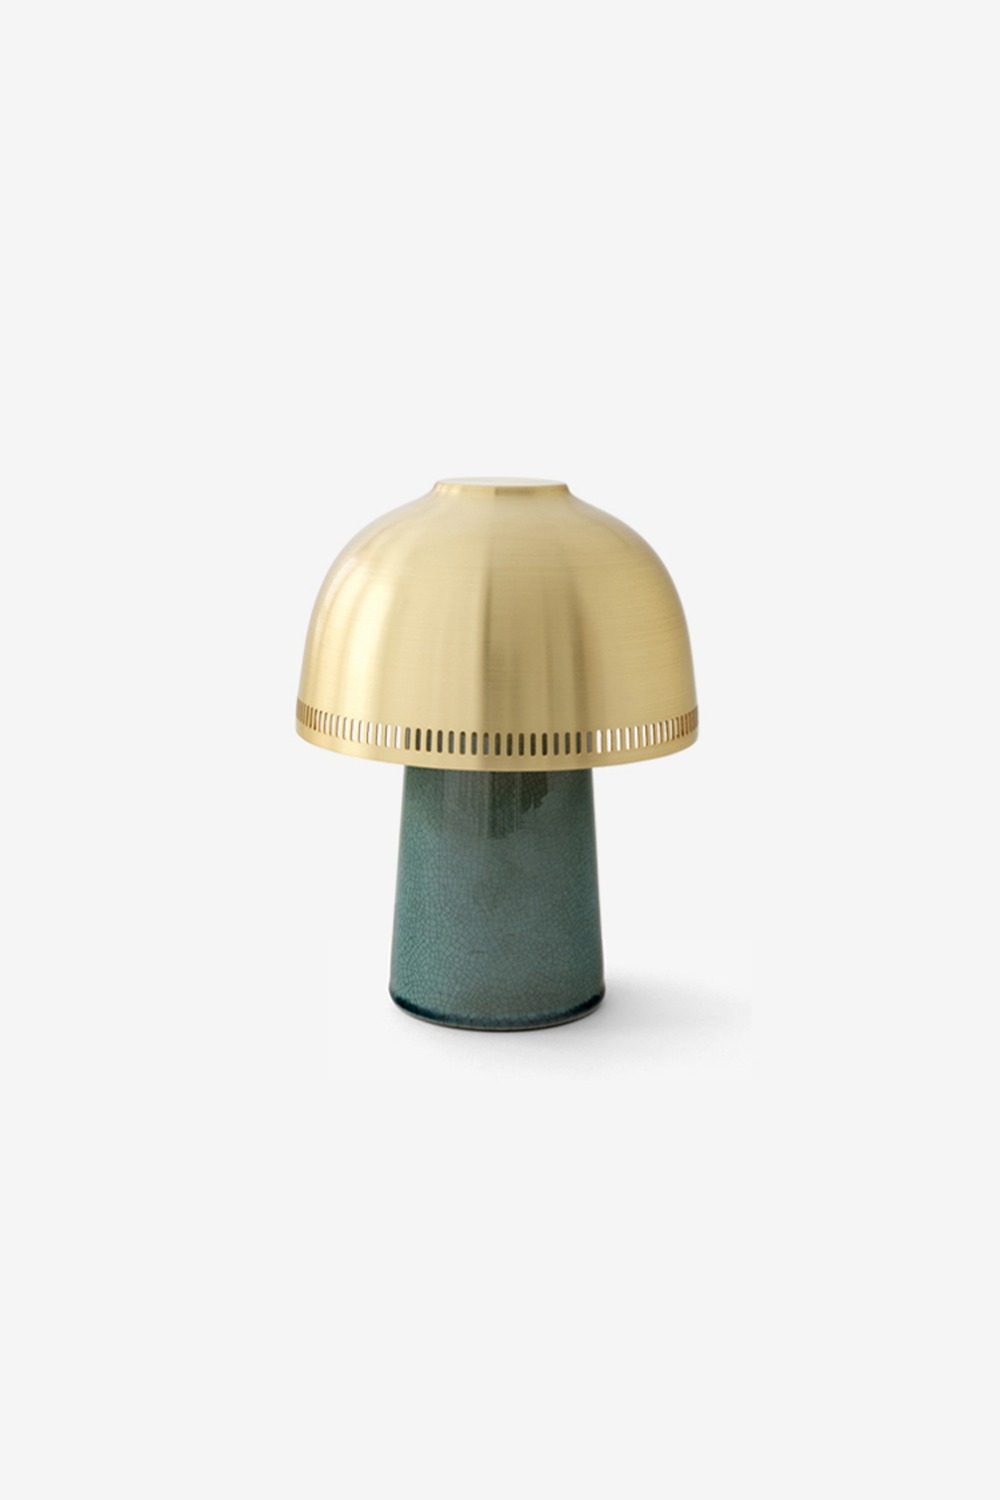 [&amp;Tradition] Raku Lamp /SH8 (BlueGreen&amp;Brass)